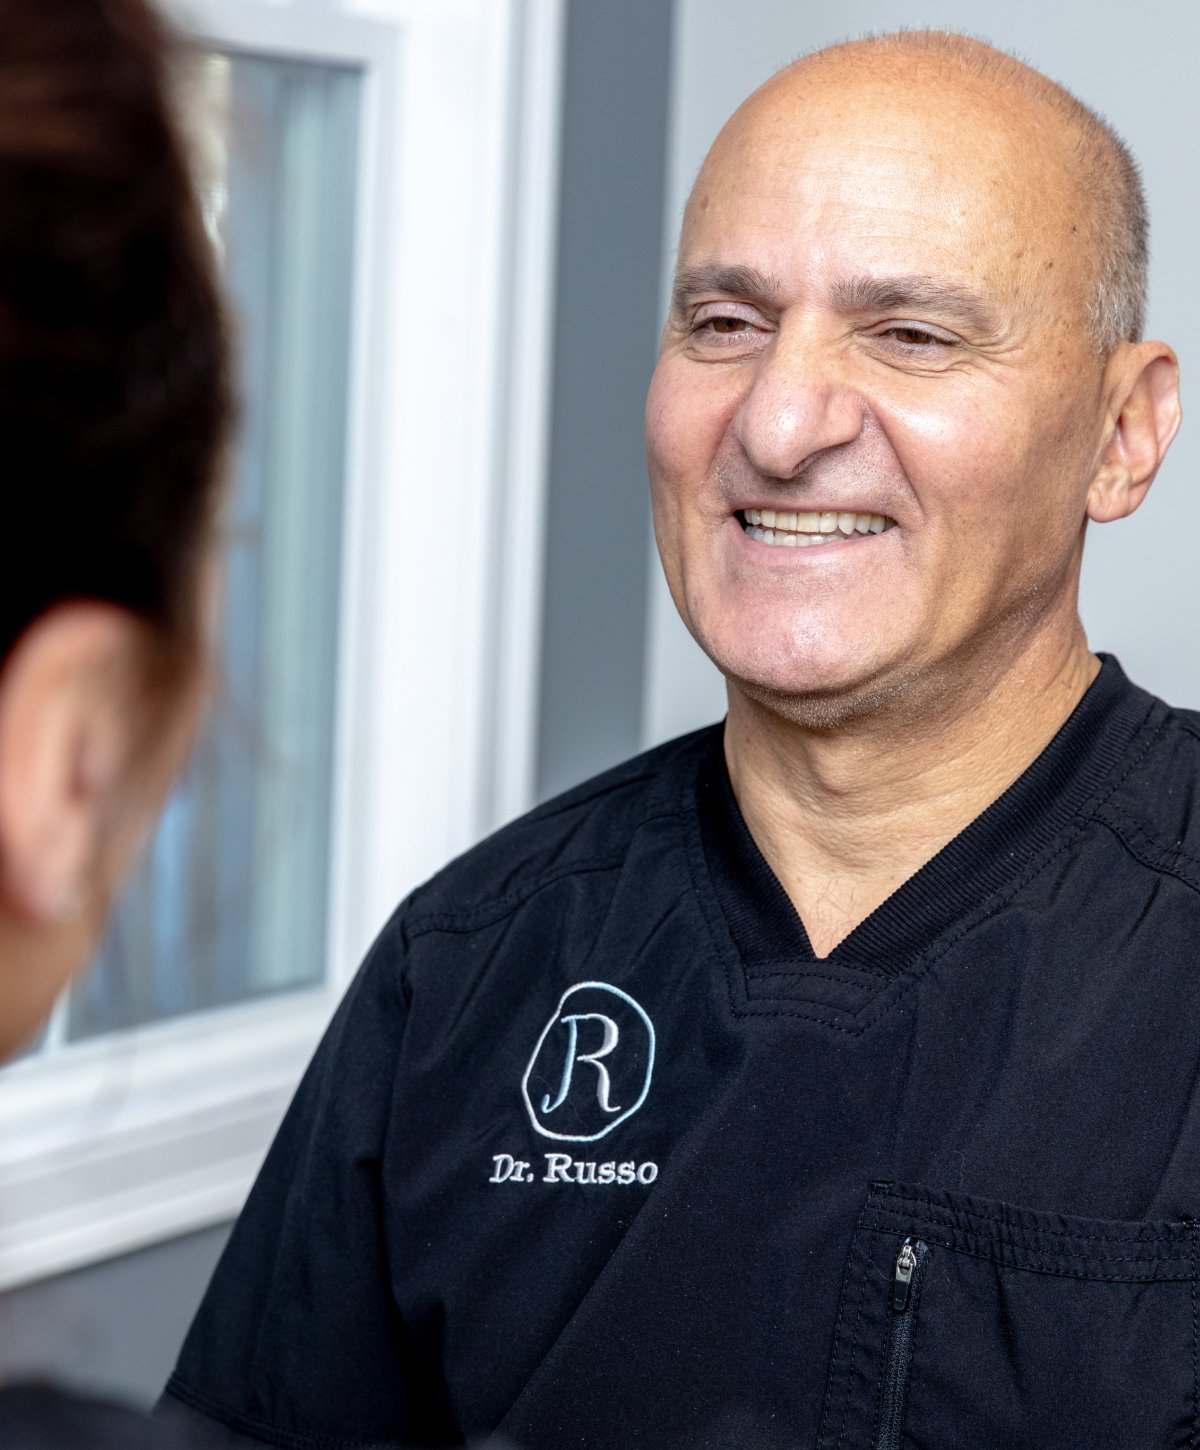 Dr. Russo - Boston Plastic Surgeon